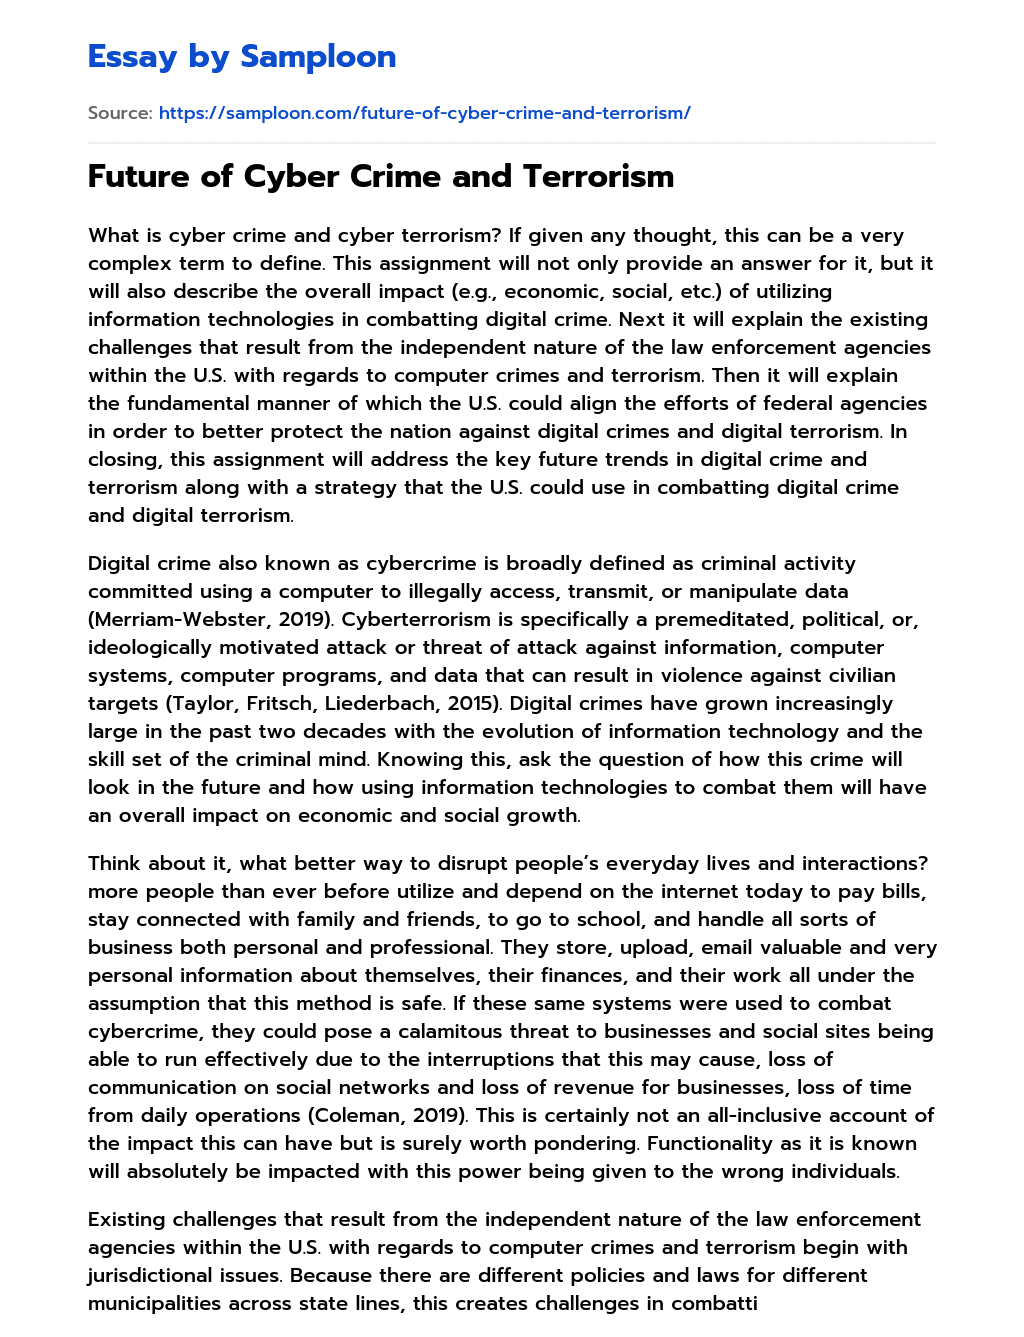 Future of Cyber Crime and Terrorism essay